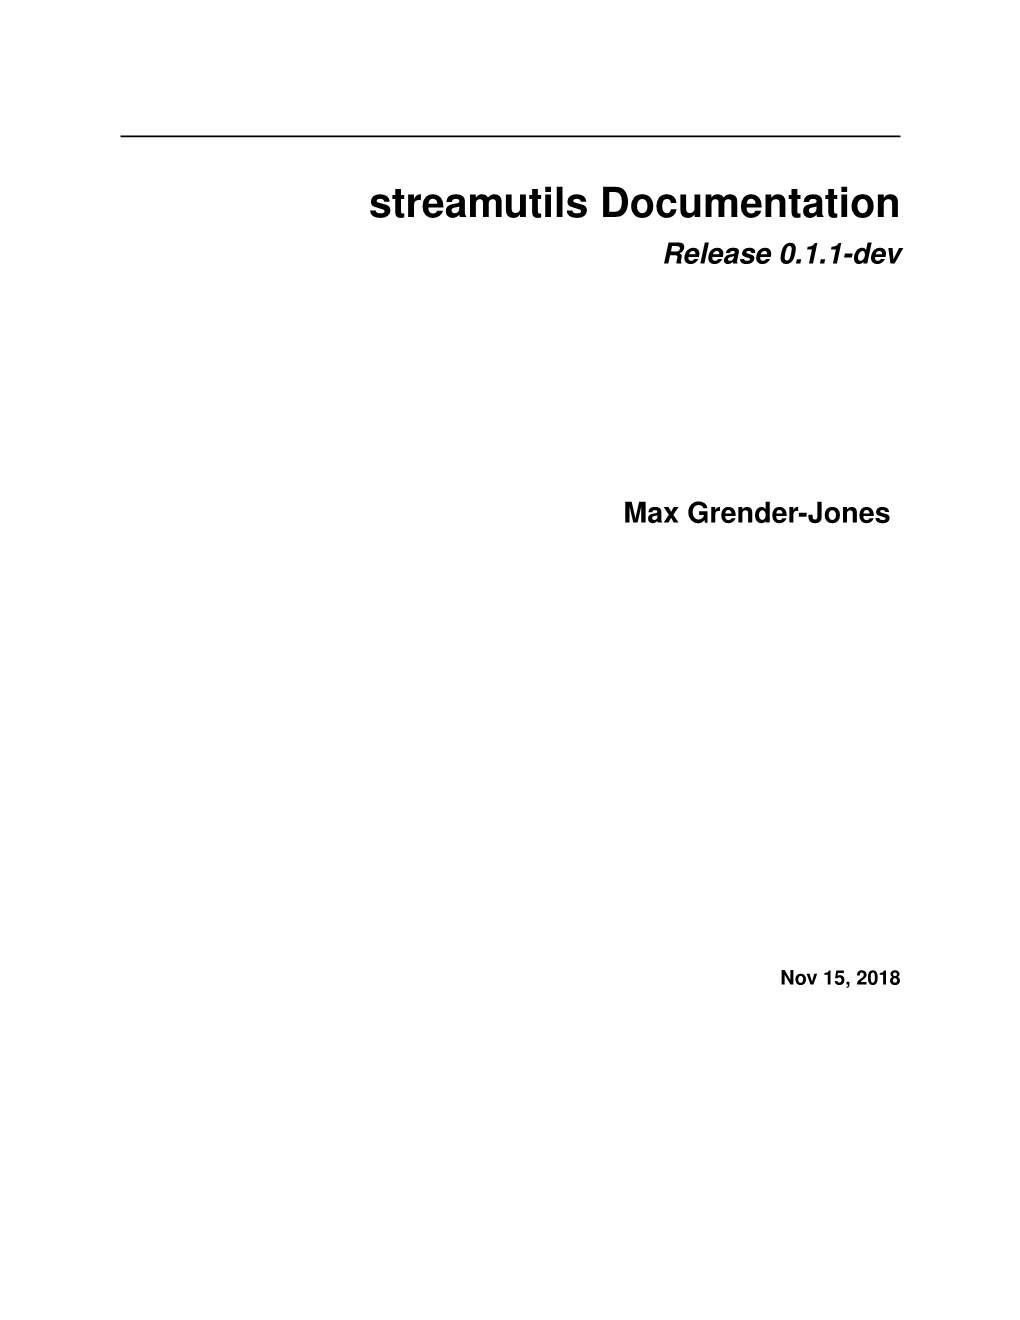 Streamutils Documentation Release 0.1.1-Dev